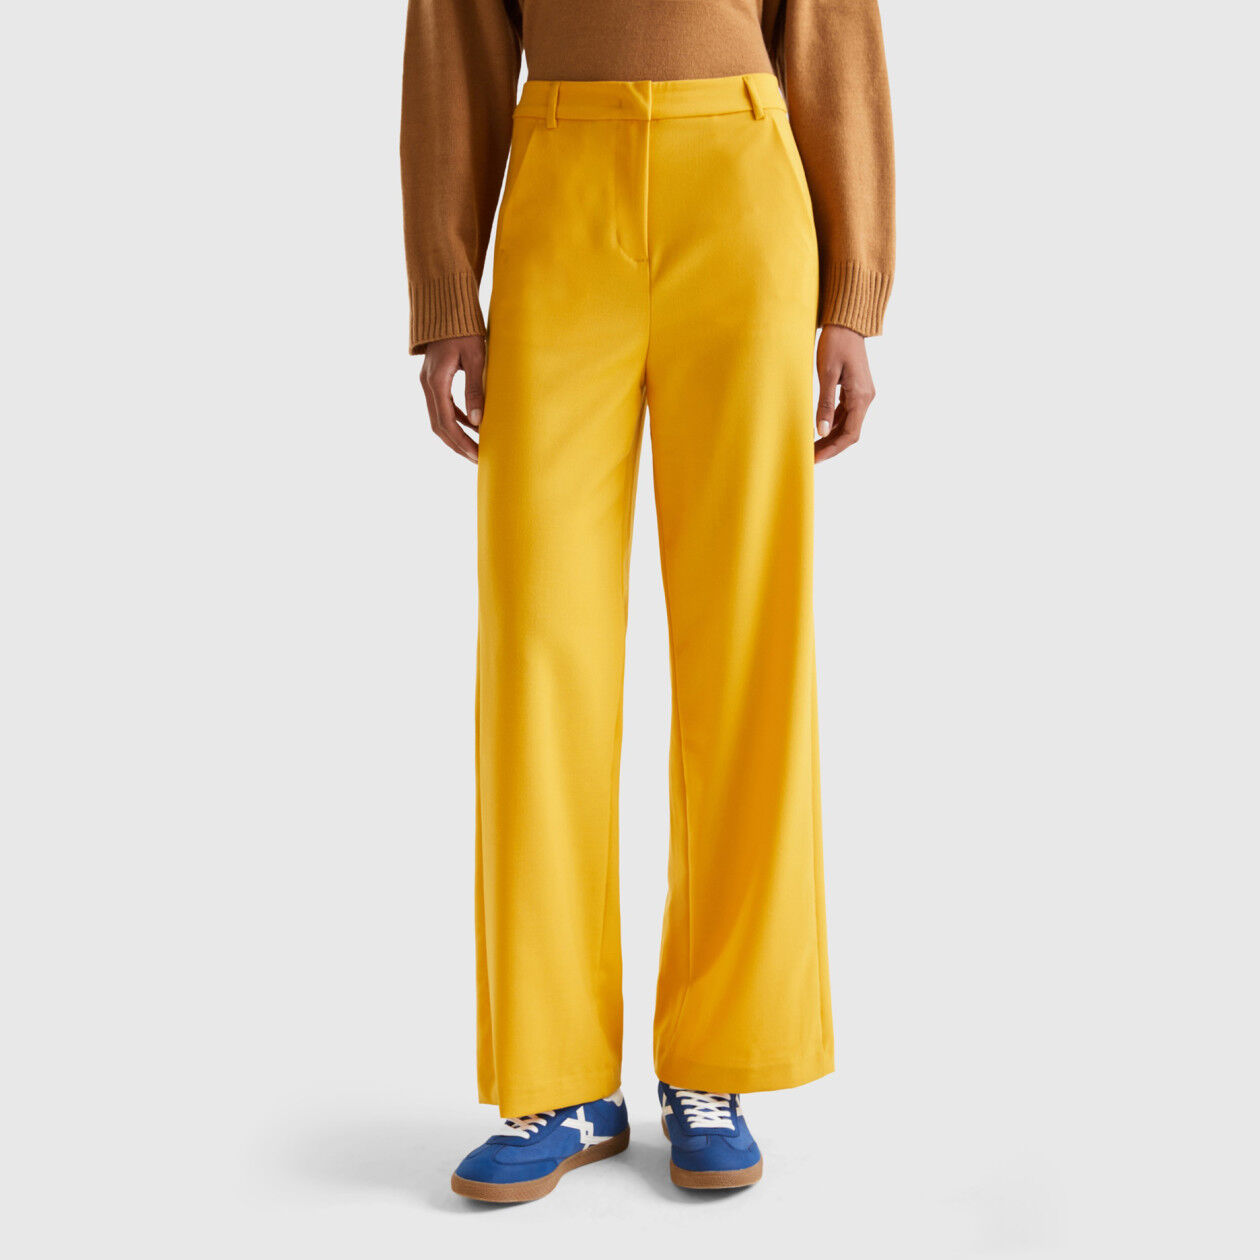 Yellow Linen Trousers, Handmade Long Wide Leg Palazzo Pants With Pockets.  Yellow High Waist Women's Summer Linen Pants, Natural Linen Pants - Etsy